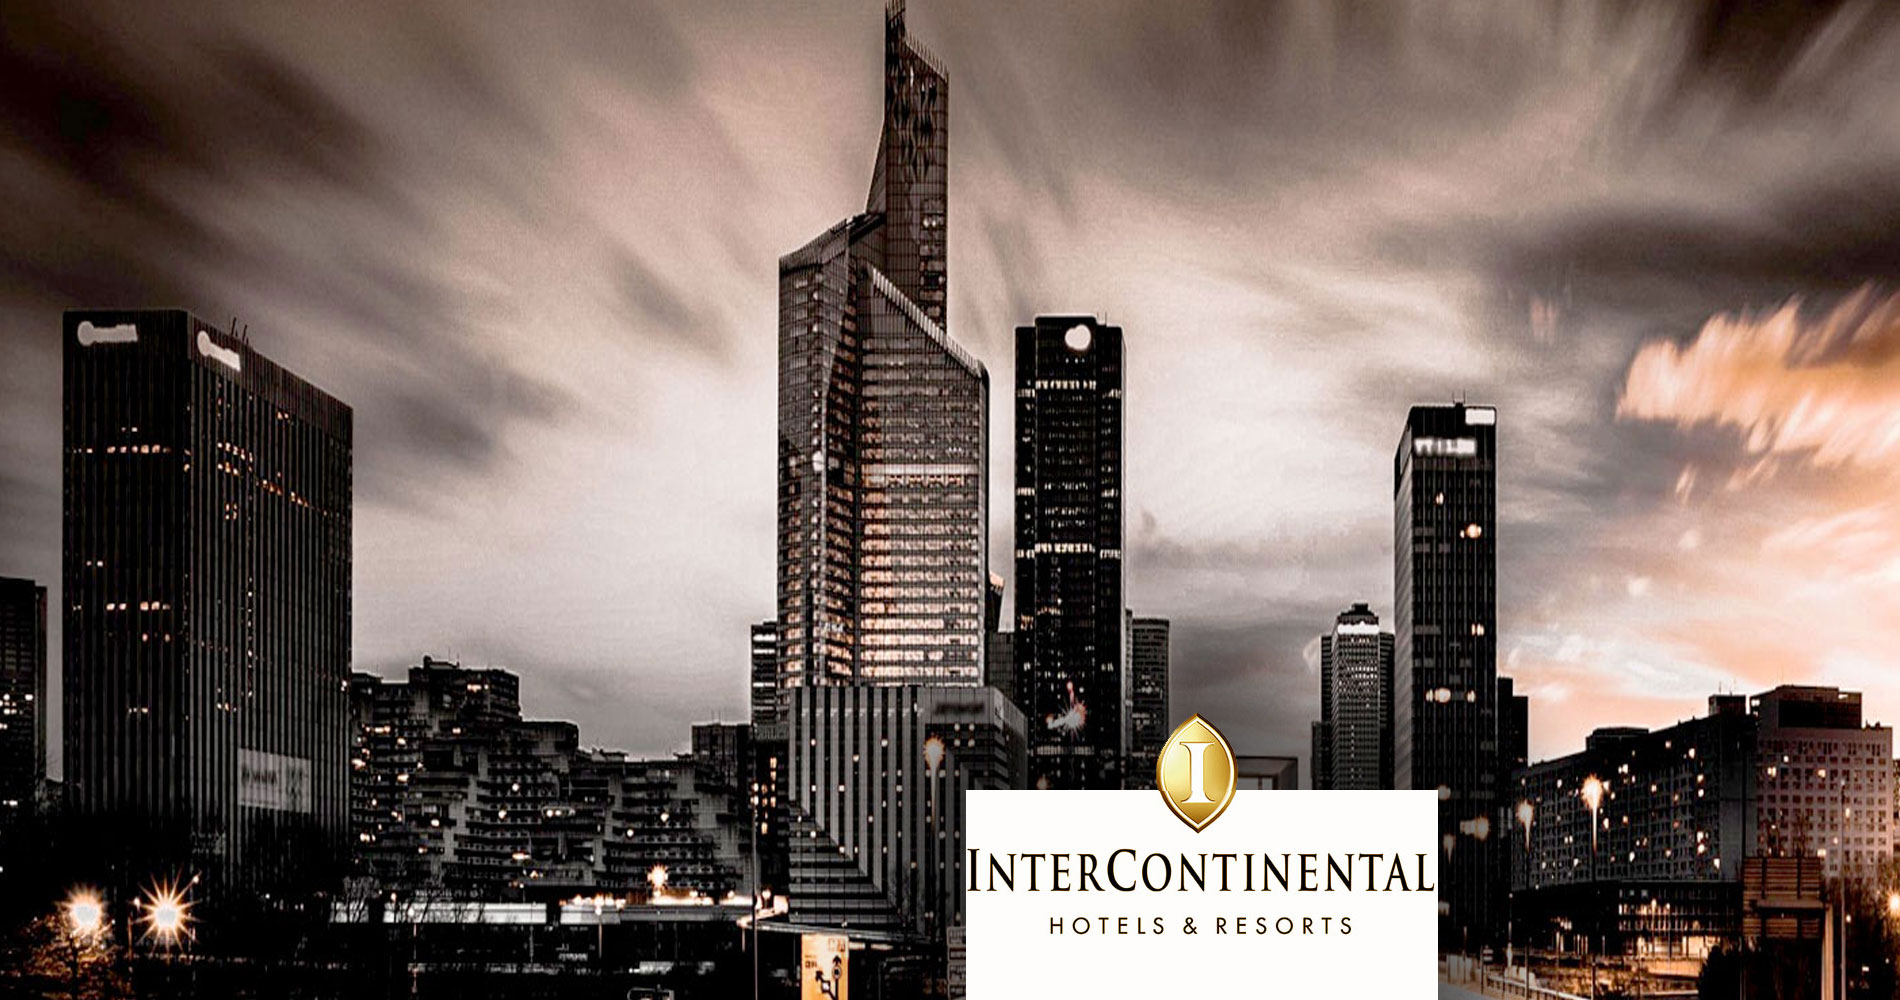 l'histoire du groupe Intercontinental